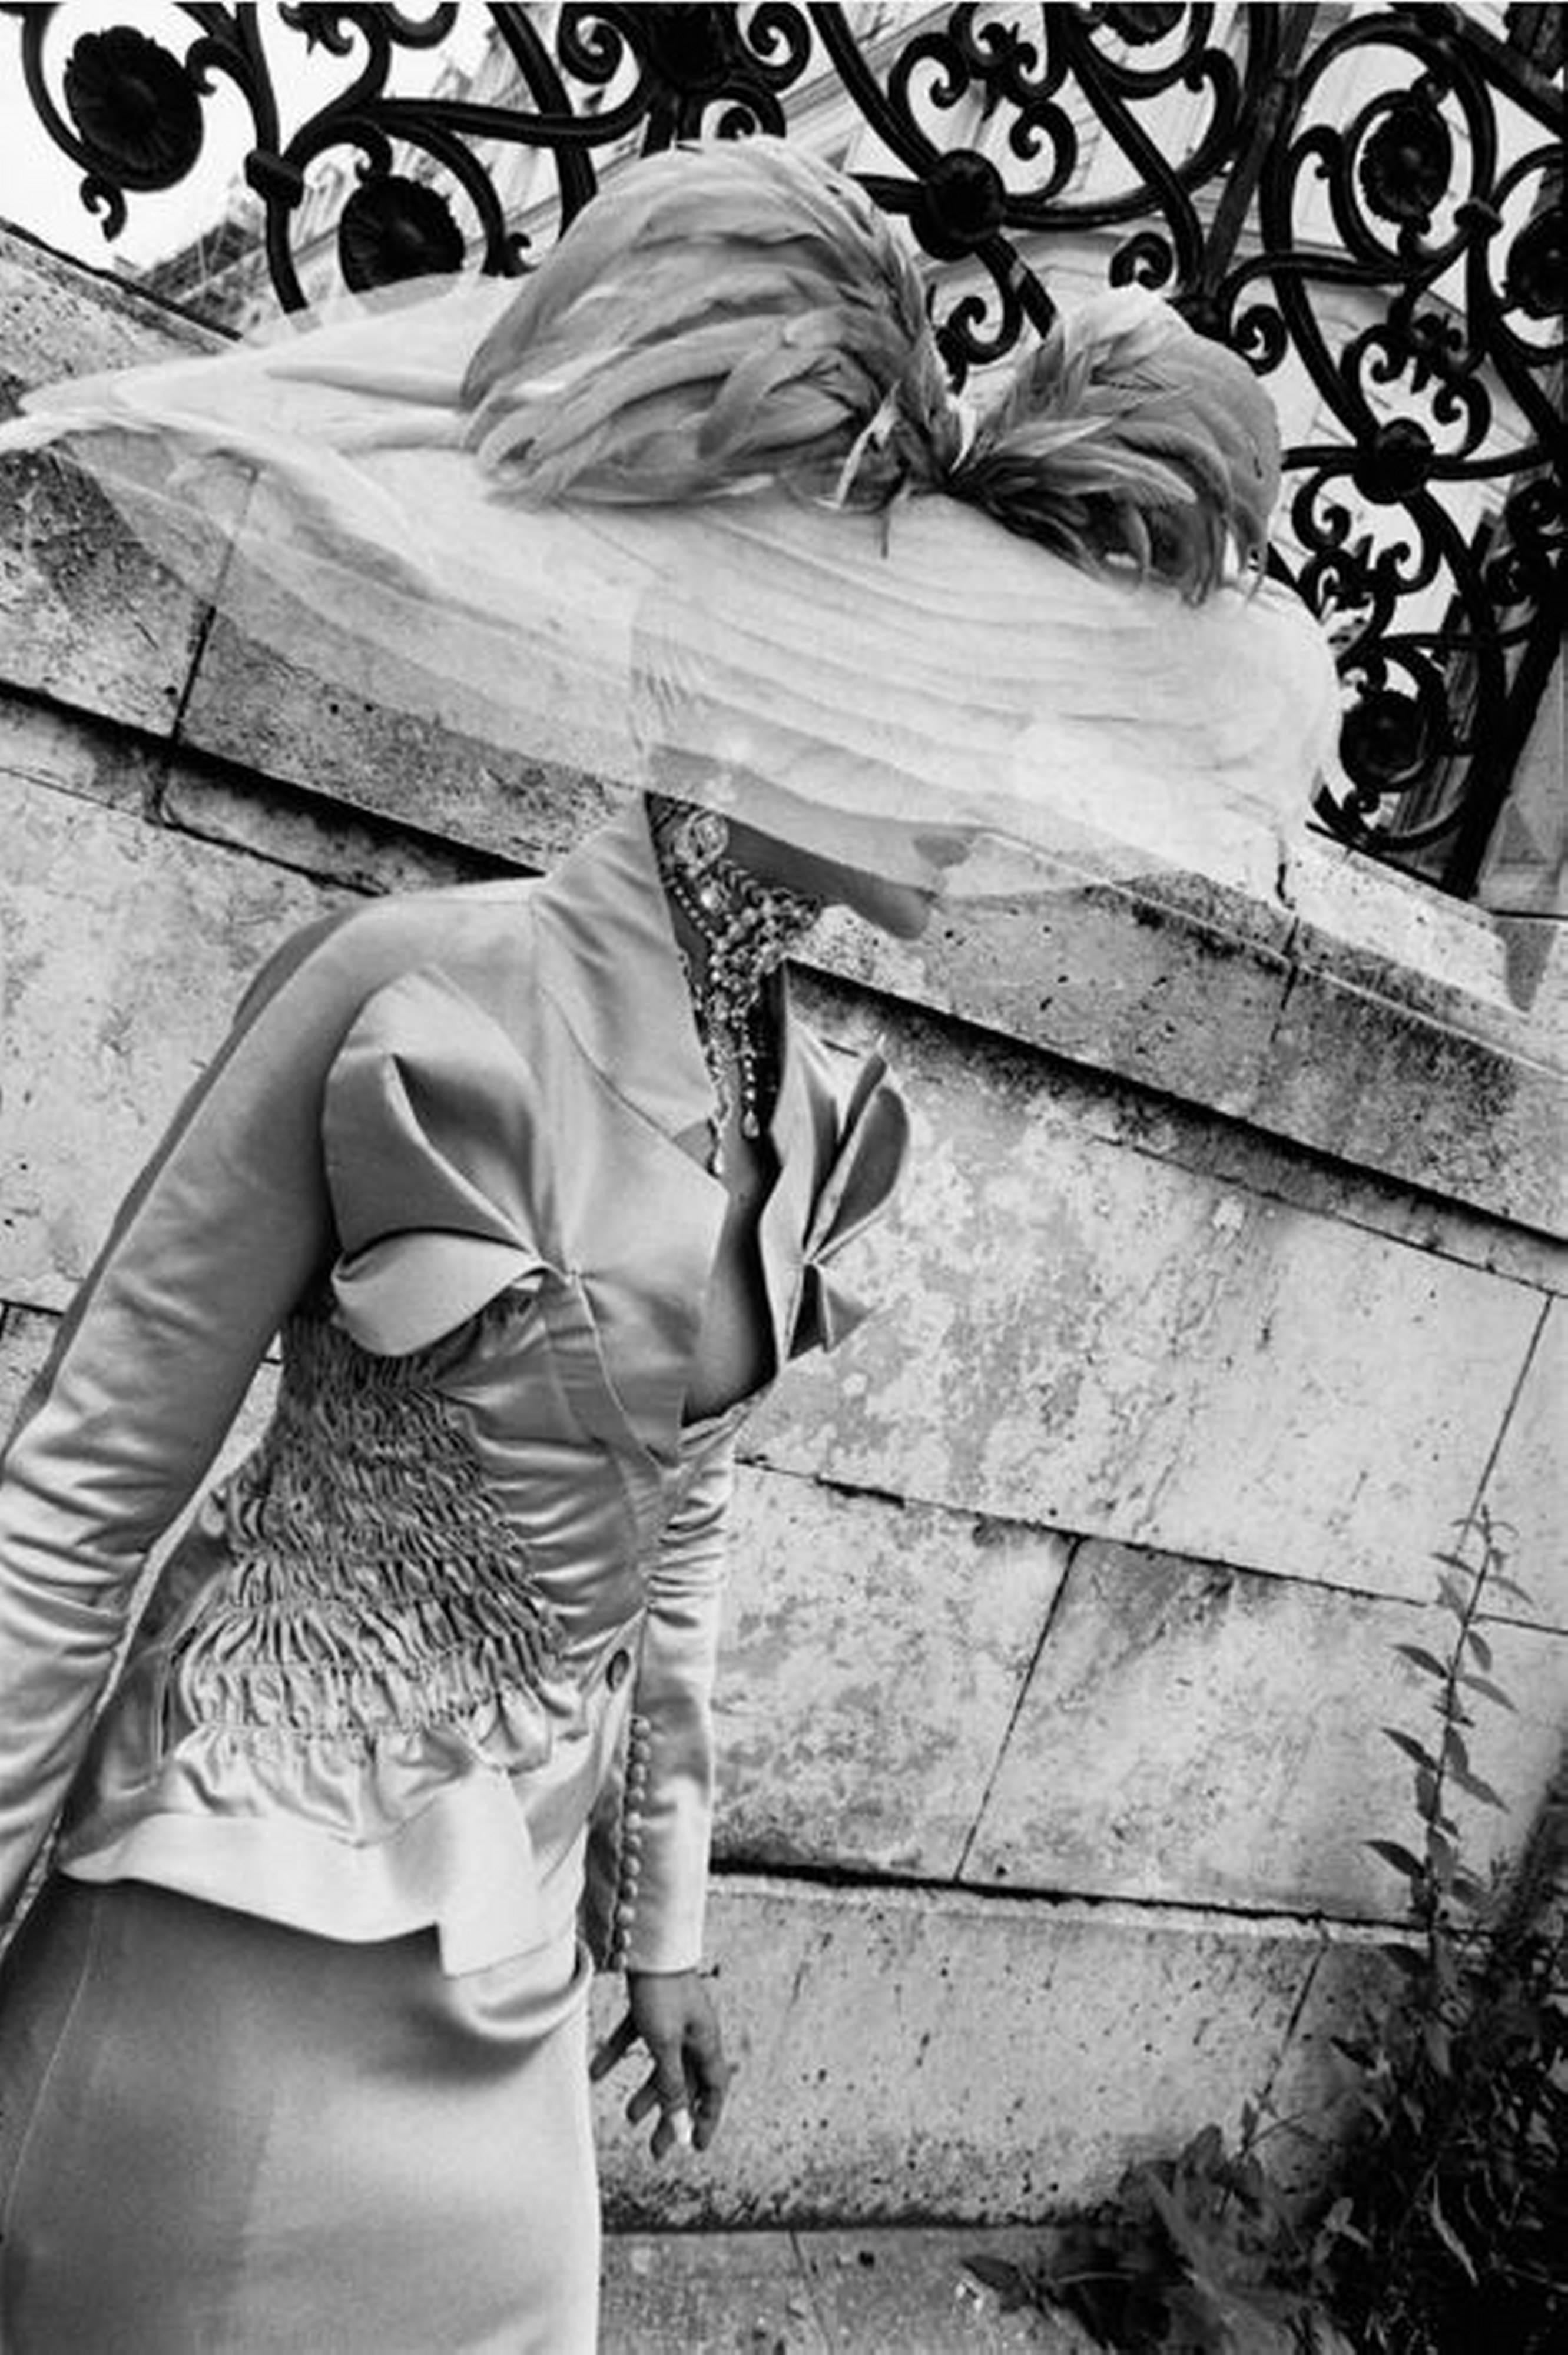 Gérard Uféras Black and White Photograph - Christian Dior Haute Couture Paris, woman with feather hat